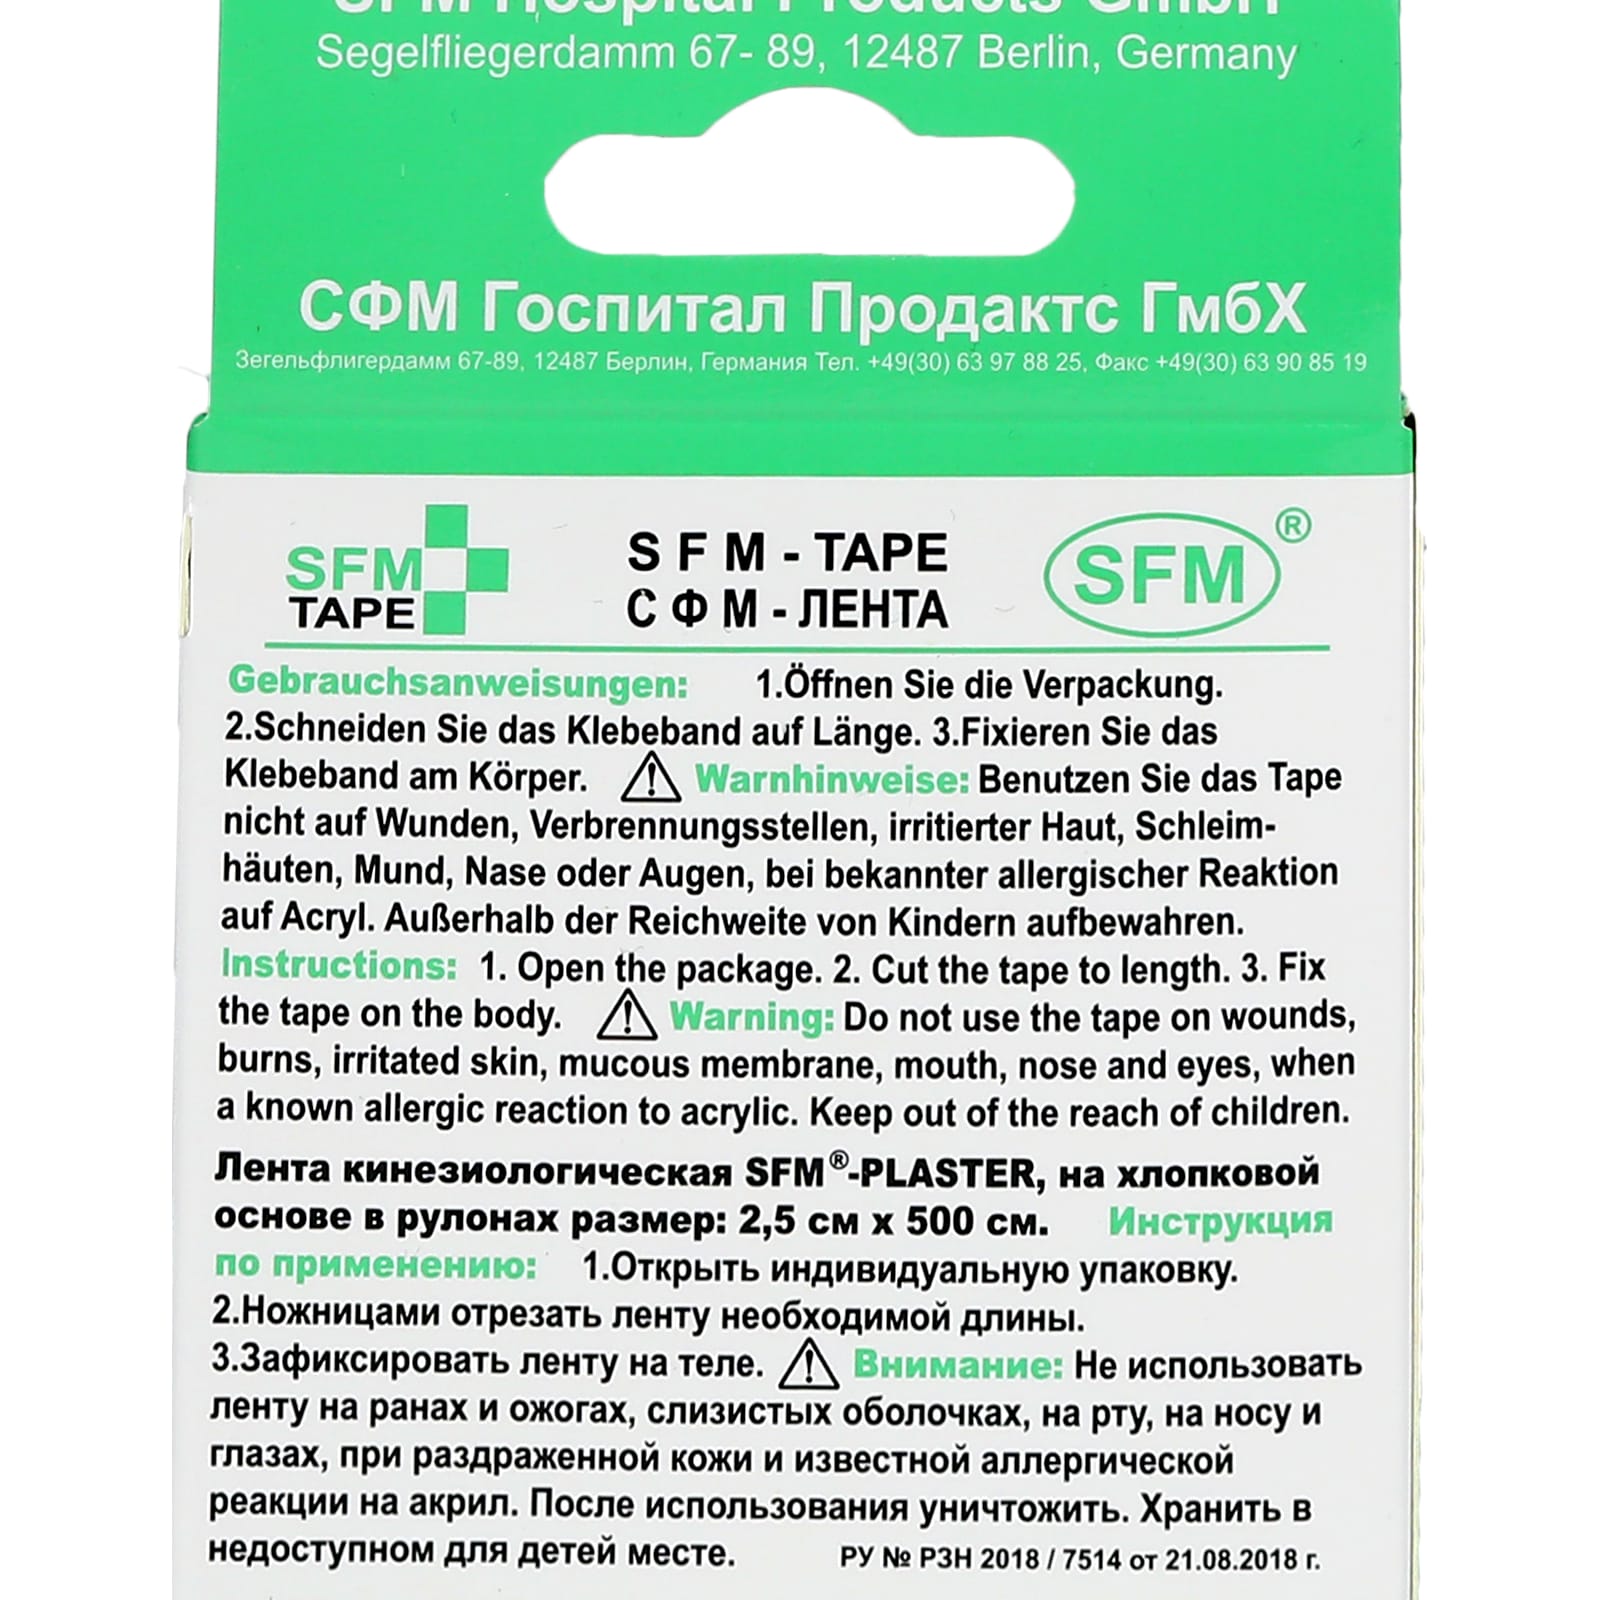 Кинезиотейп SFM Hospital Products Plaster на хлопковой основе 2.5х500 см зеленого цвета в диспенсере - фото 4